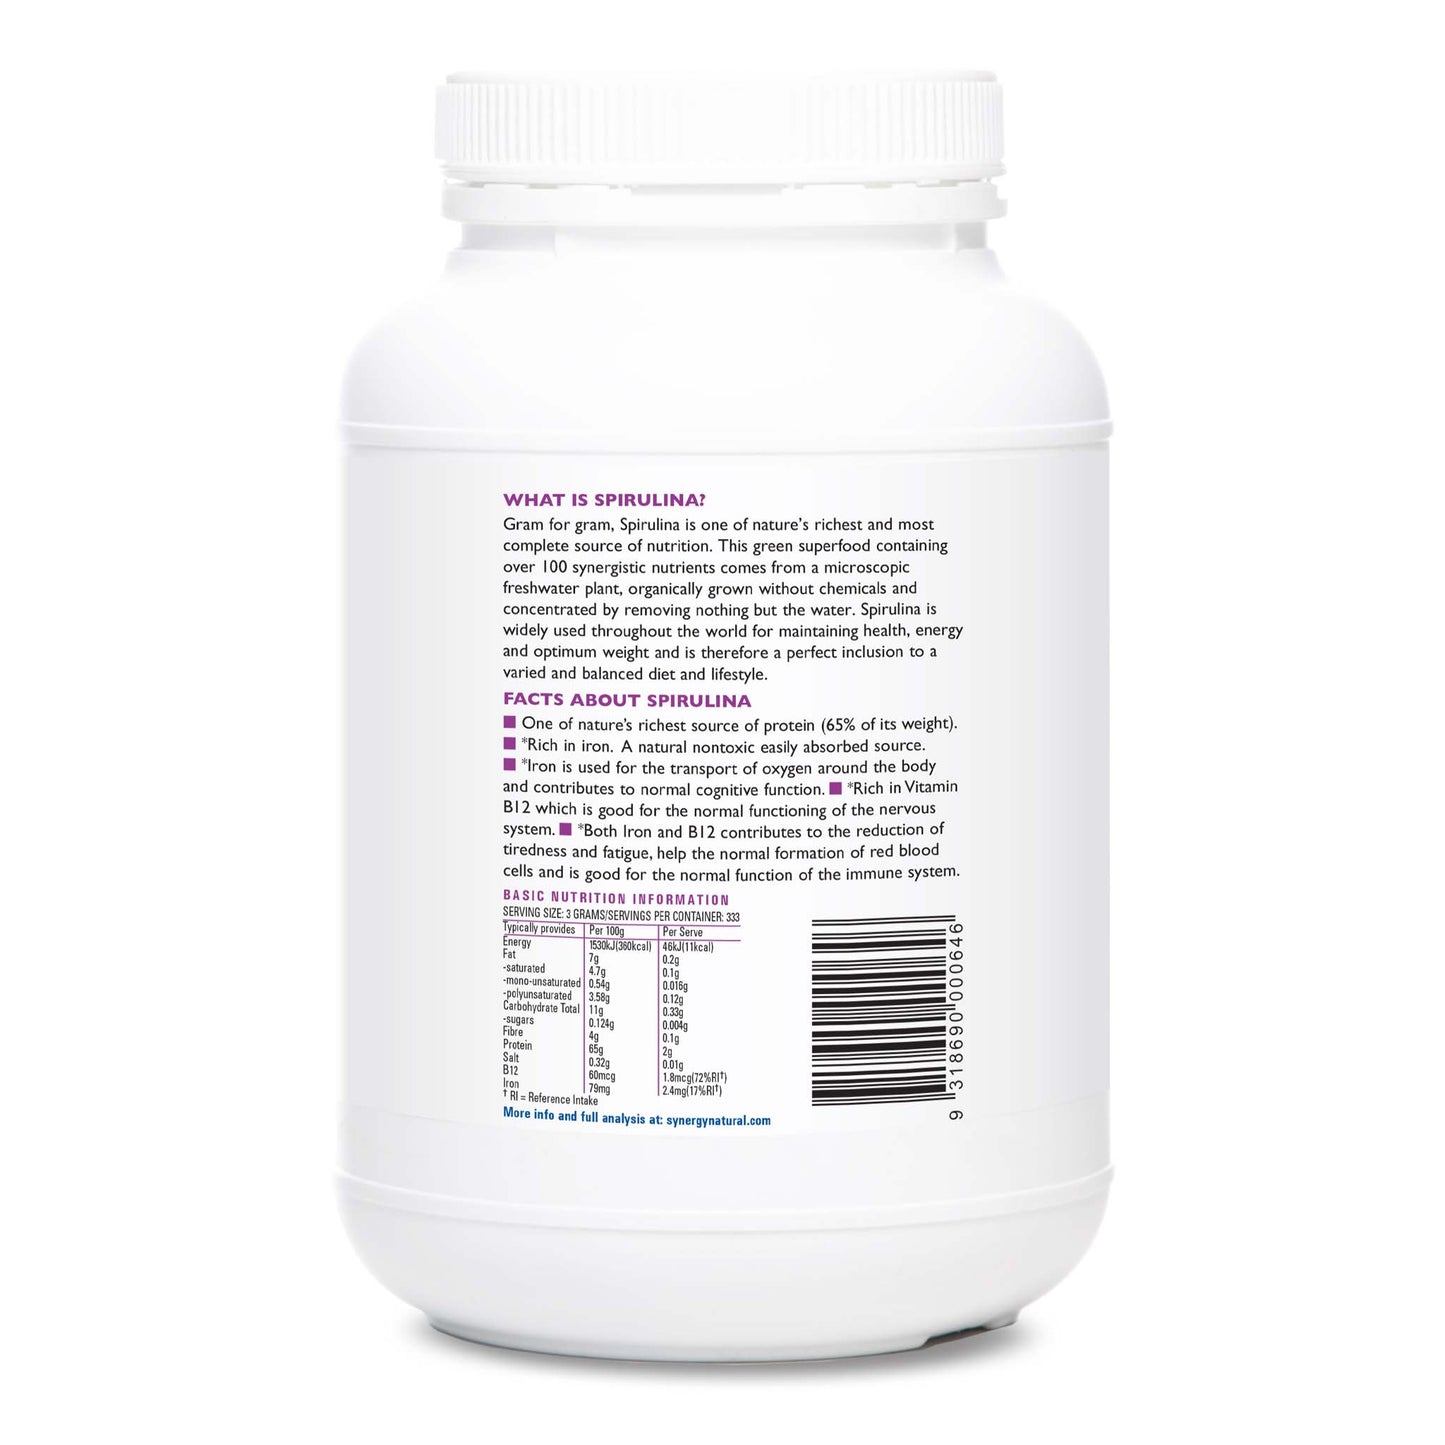 Synergy Natural Organic Spirulina 1kg Powder